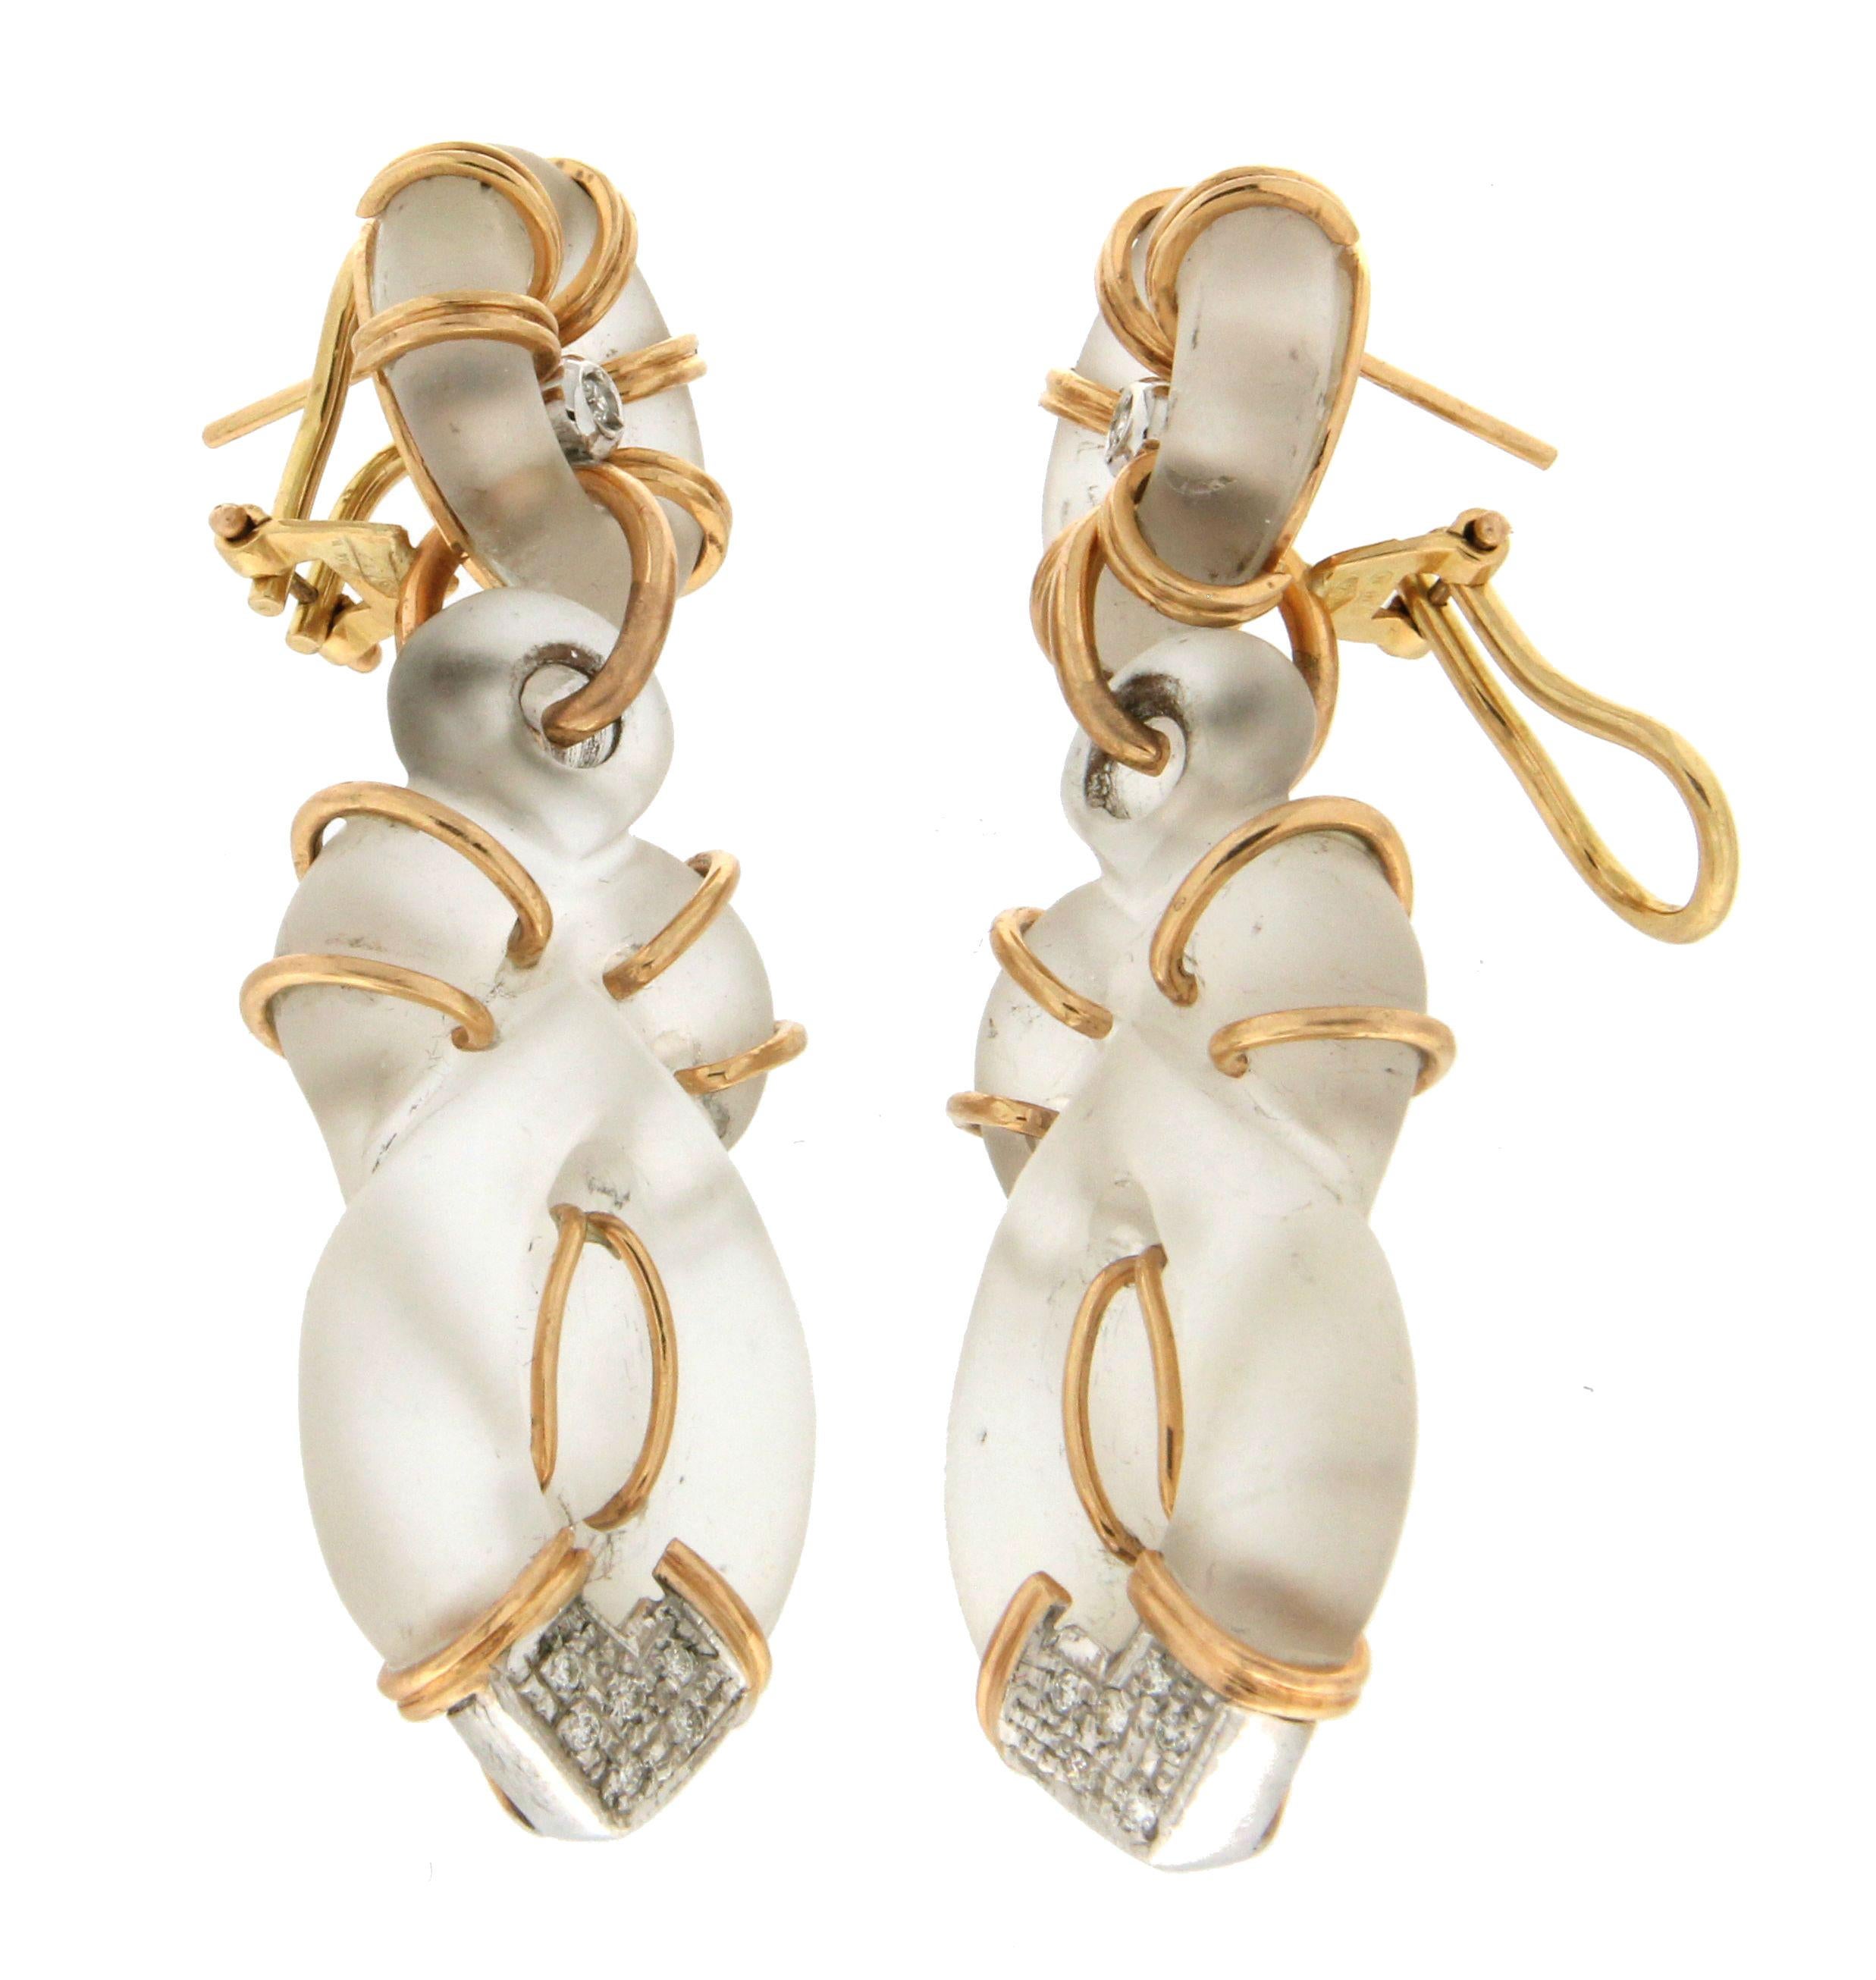 Brilliant Cut Handcraft Rock Crystal 18 Karat Yellow and White Gold Diamonds Stud Earrings